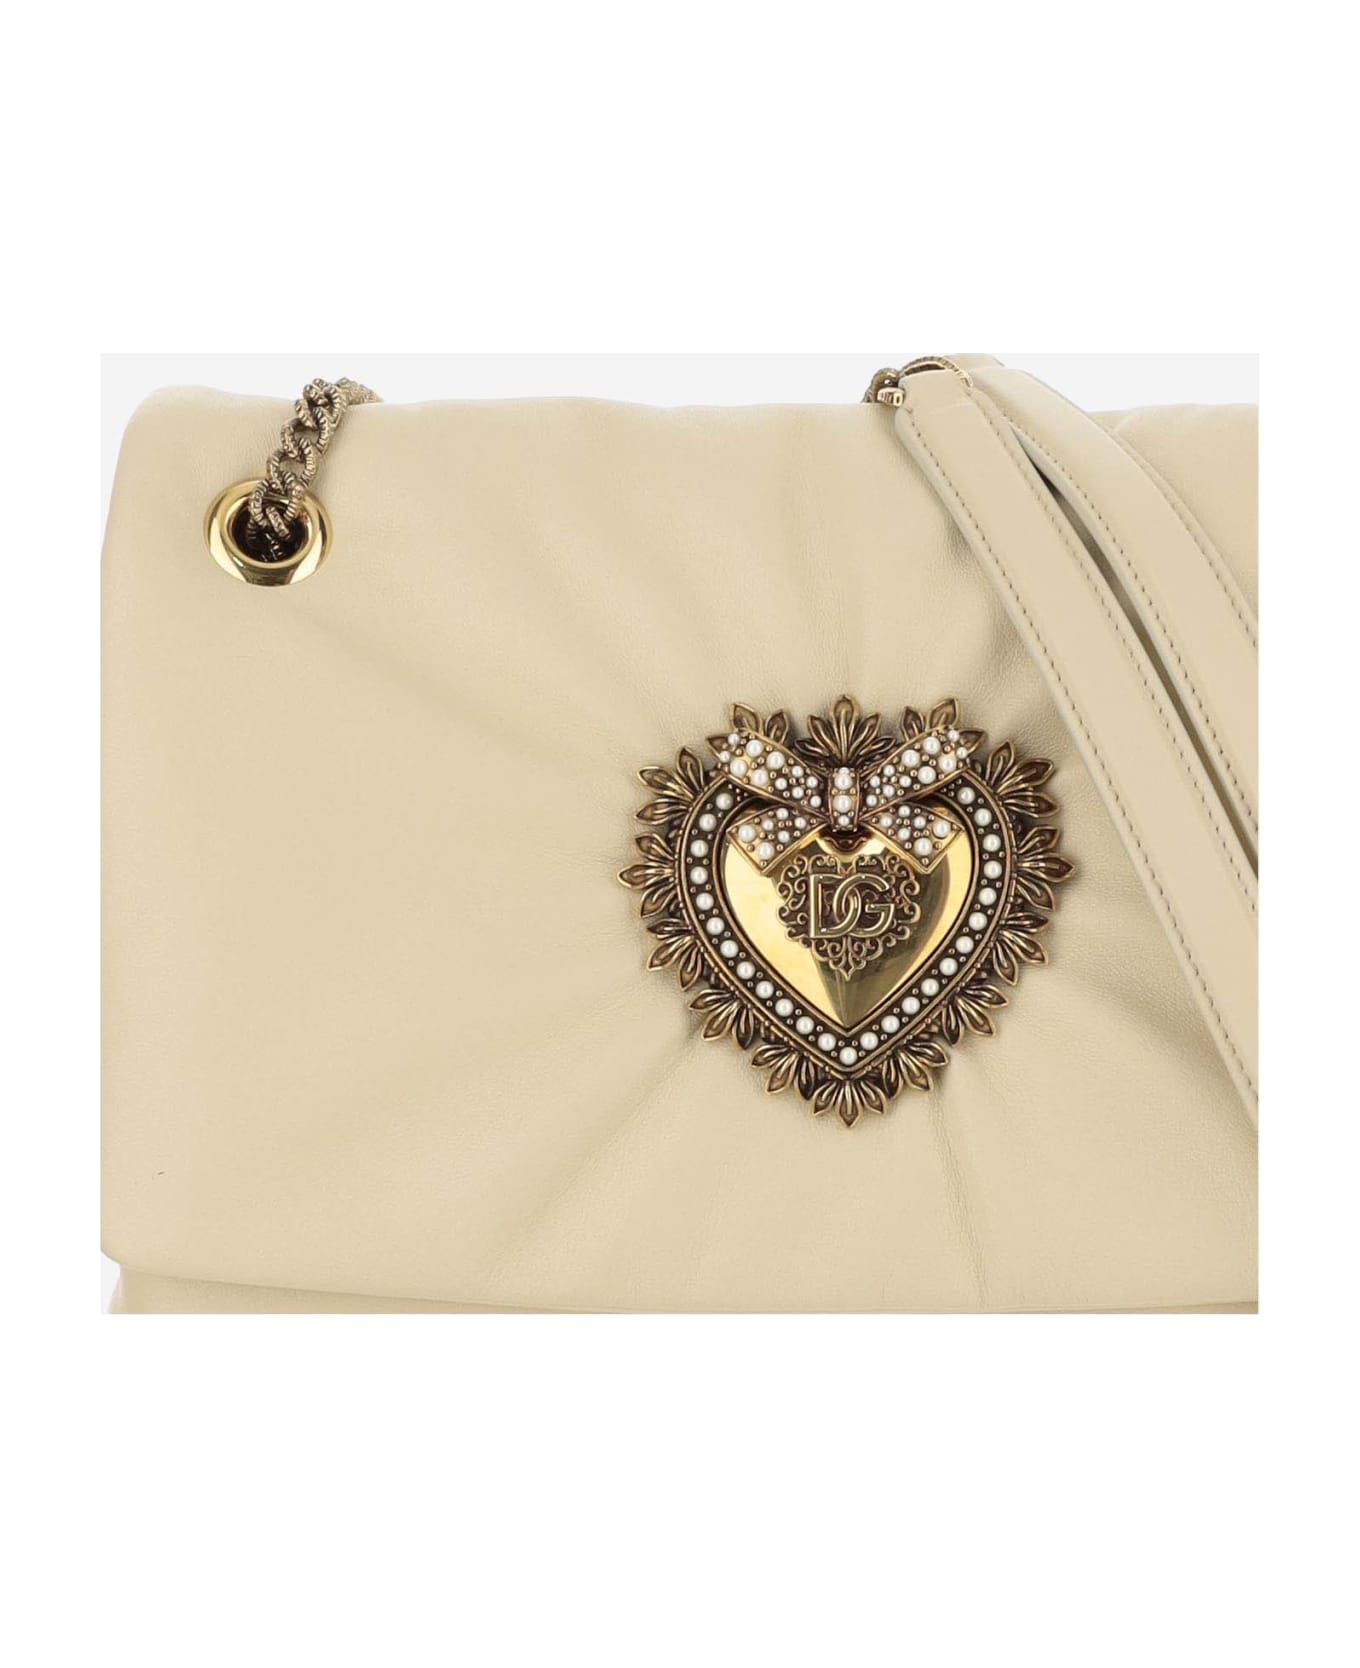 Dolce & Gabbana Devotion Soft Medium Shoulder Bag - Burro ショルダーバッグ